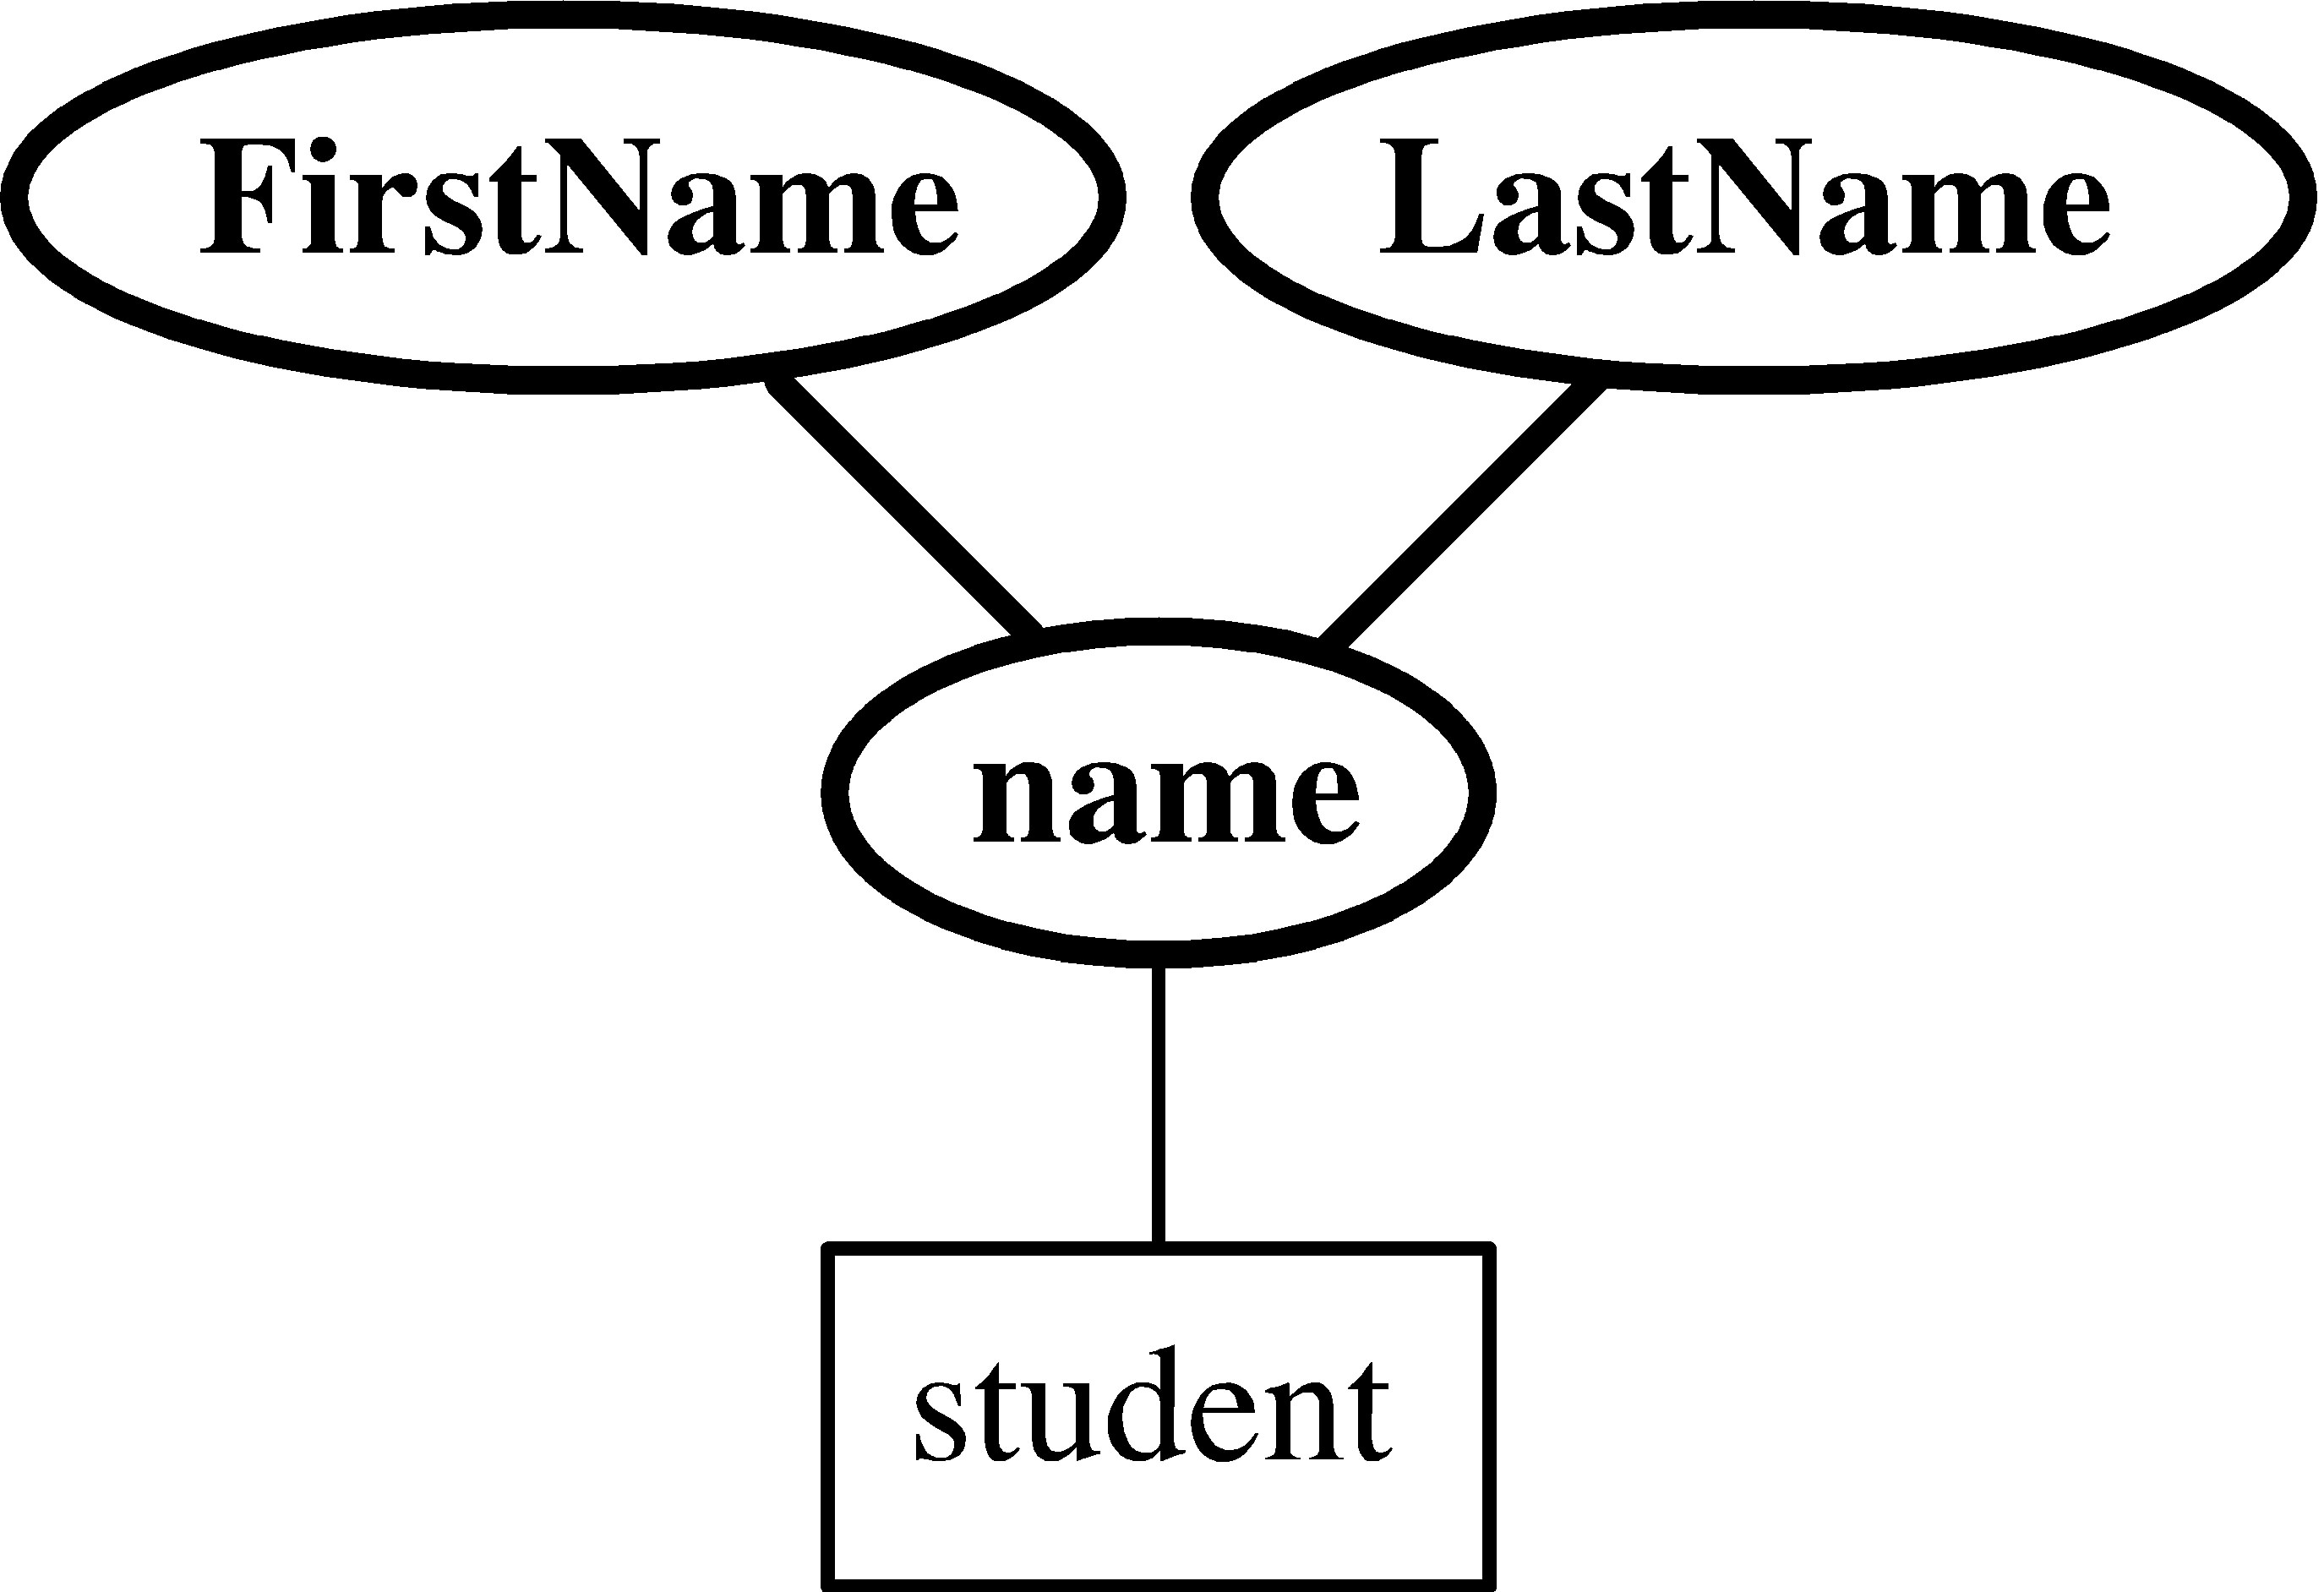 Entity-Relationship Model for Er Diagram Domain